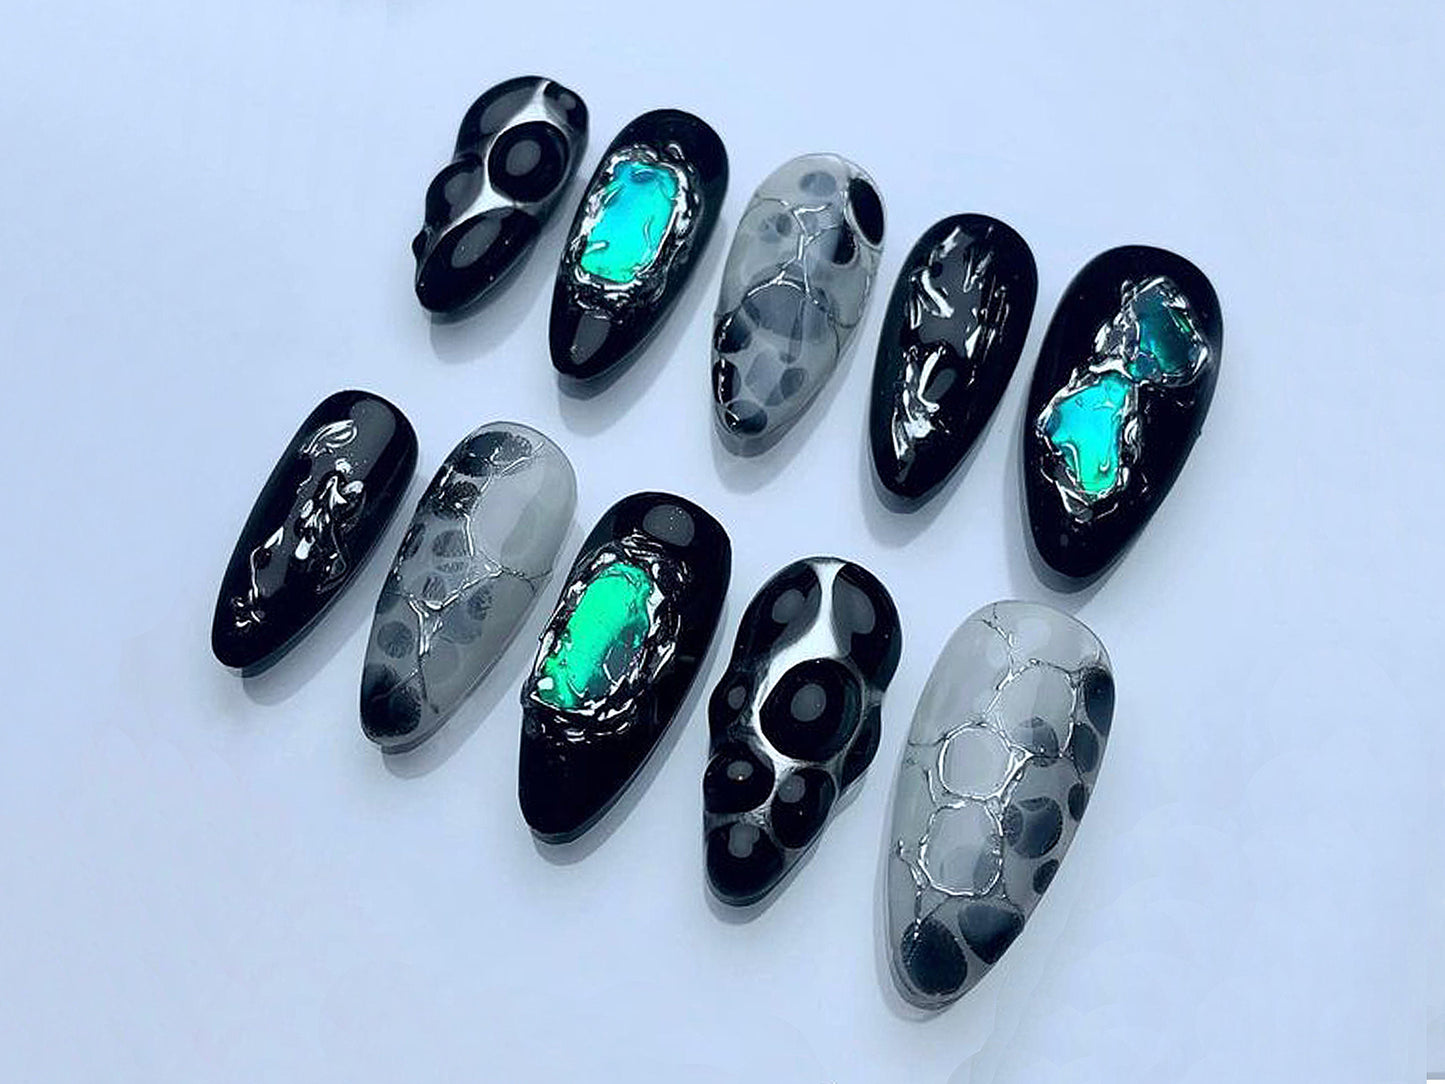 Acubi Style Press On Nails Almond | Aurora Motifs Nail Set | Metallic Black and Grey 3D Gel Nail Art | Acrylic Nails | Fake Nails | J144